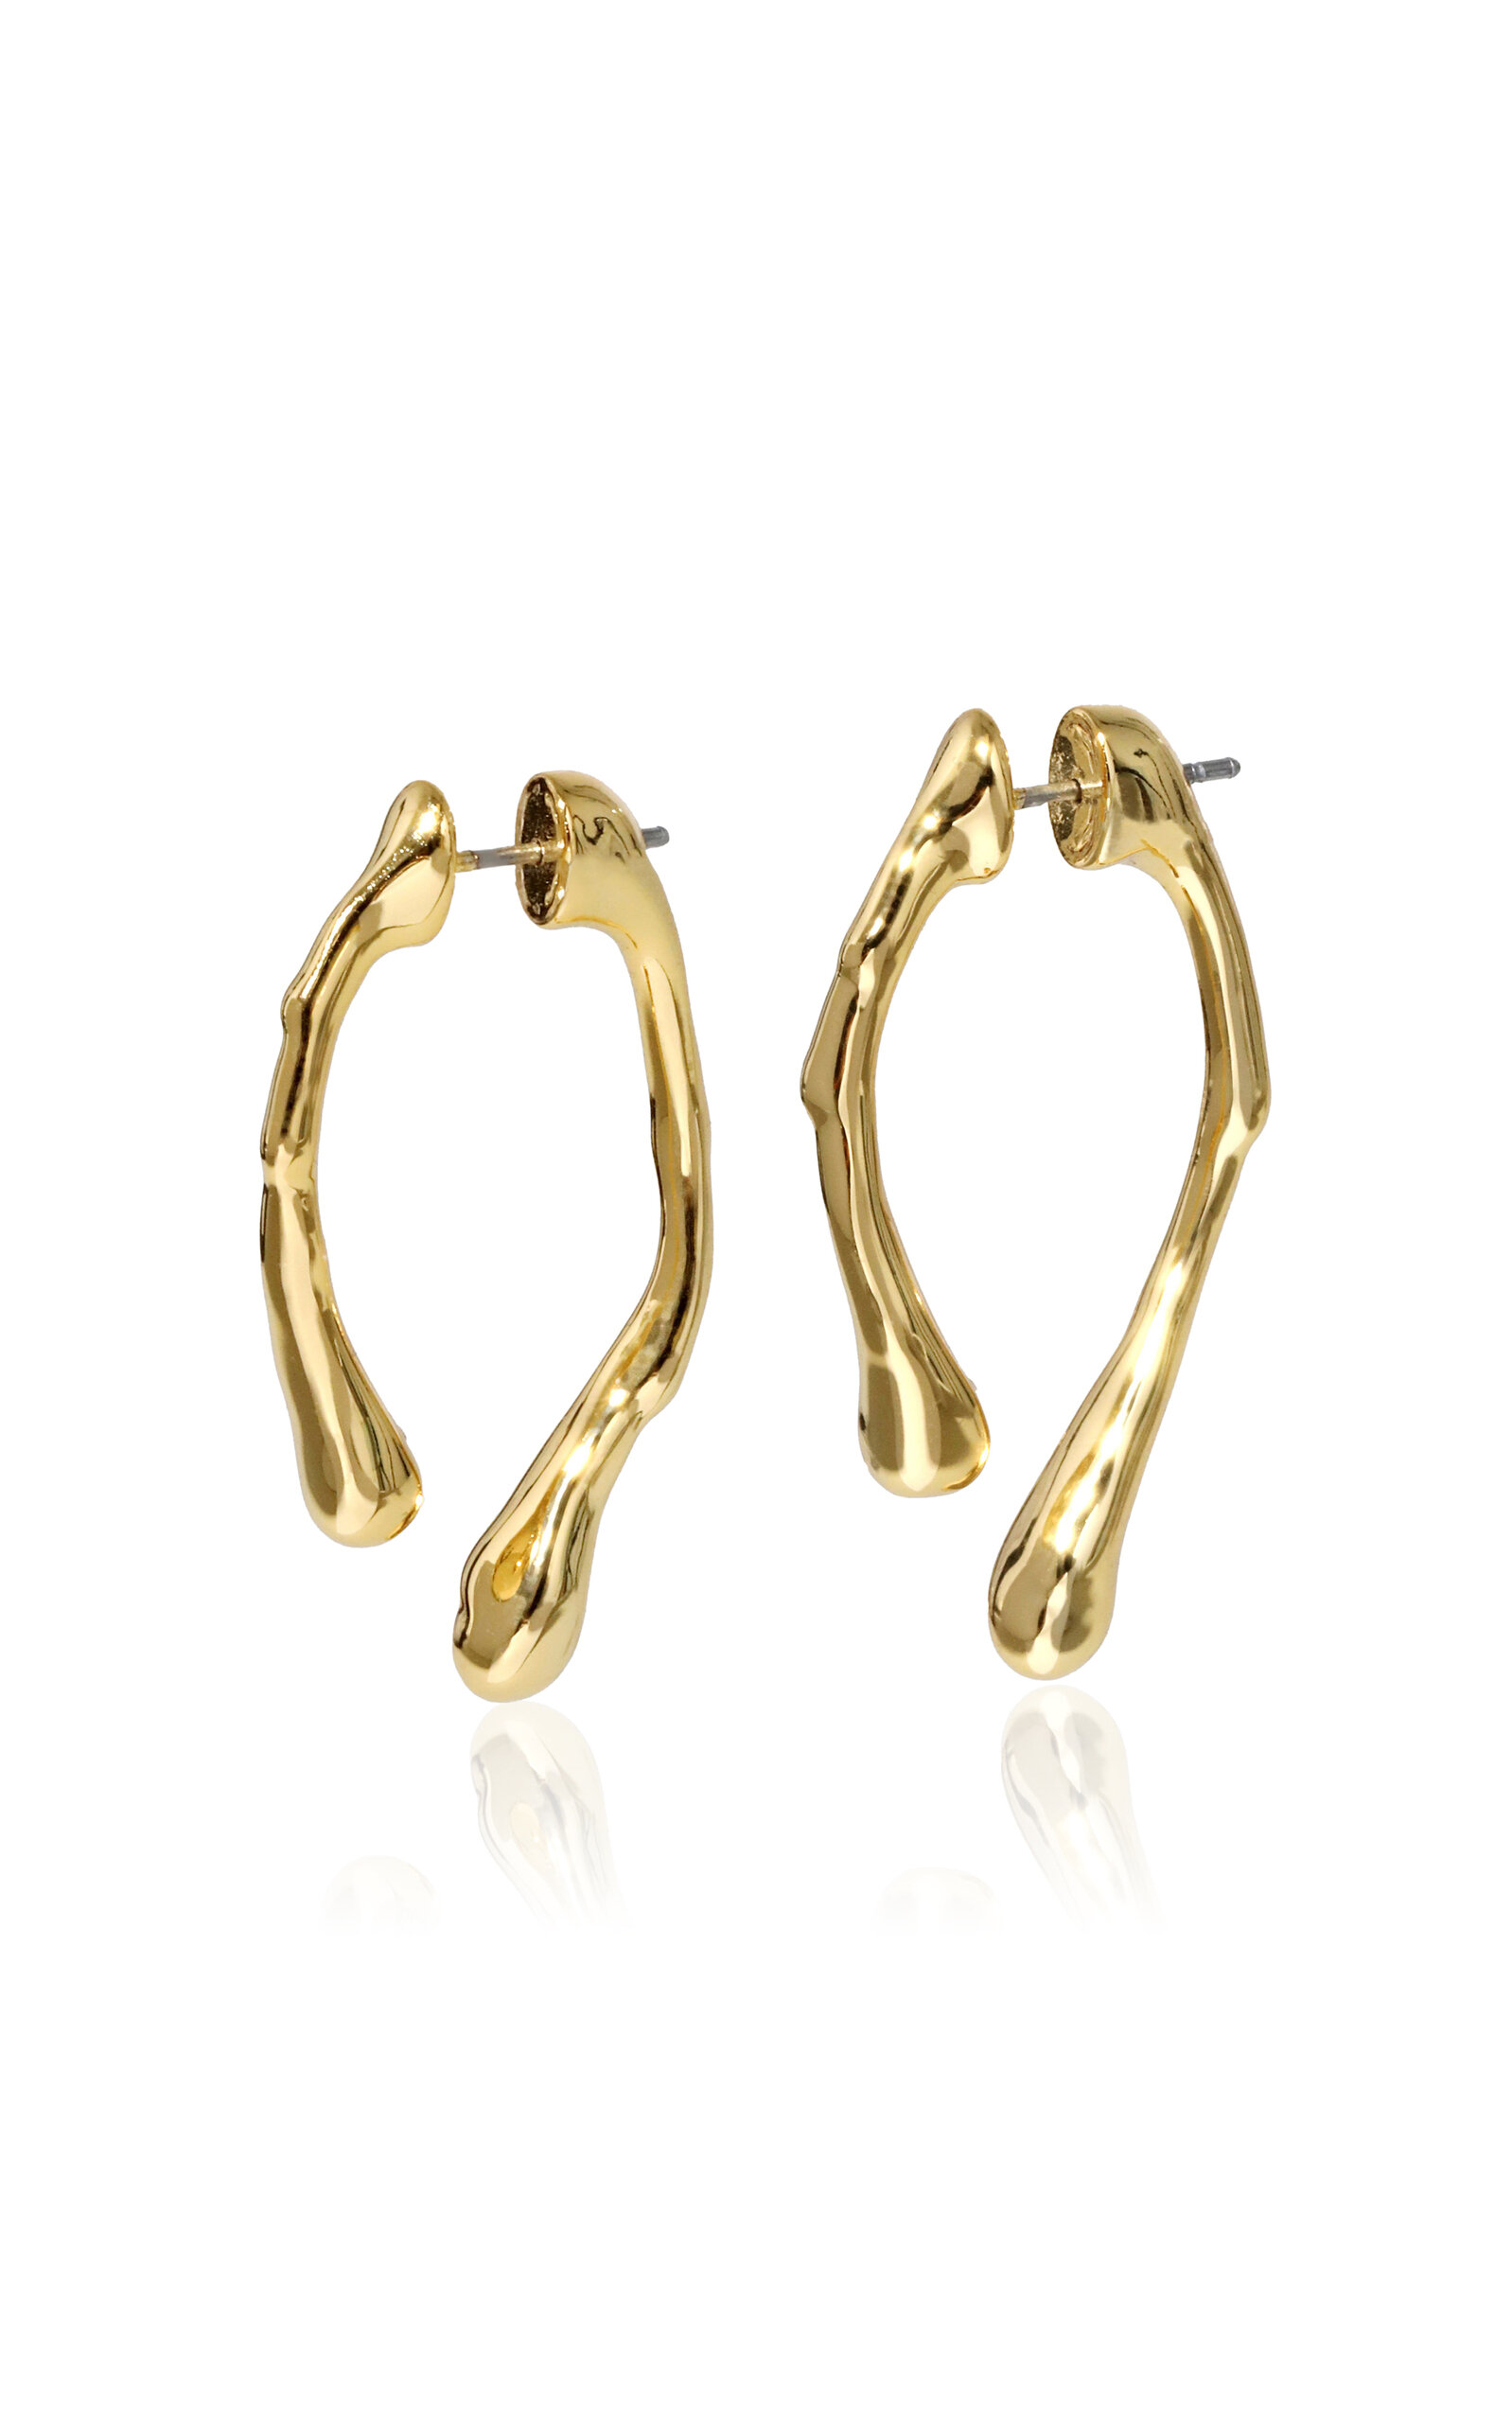 Drippy 14K Gold-Plated Earrings